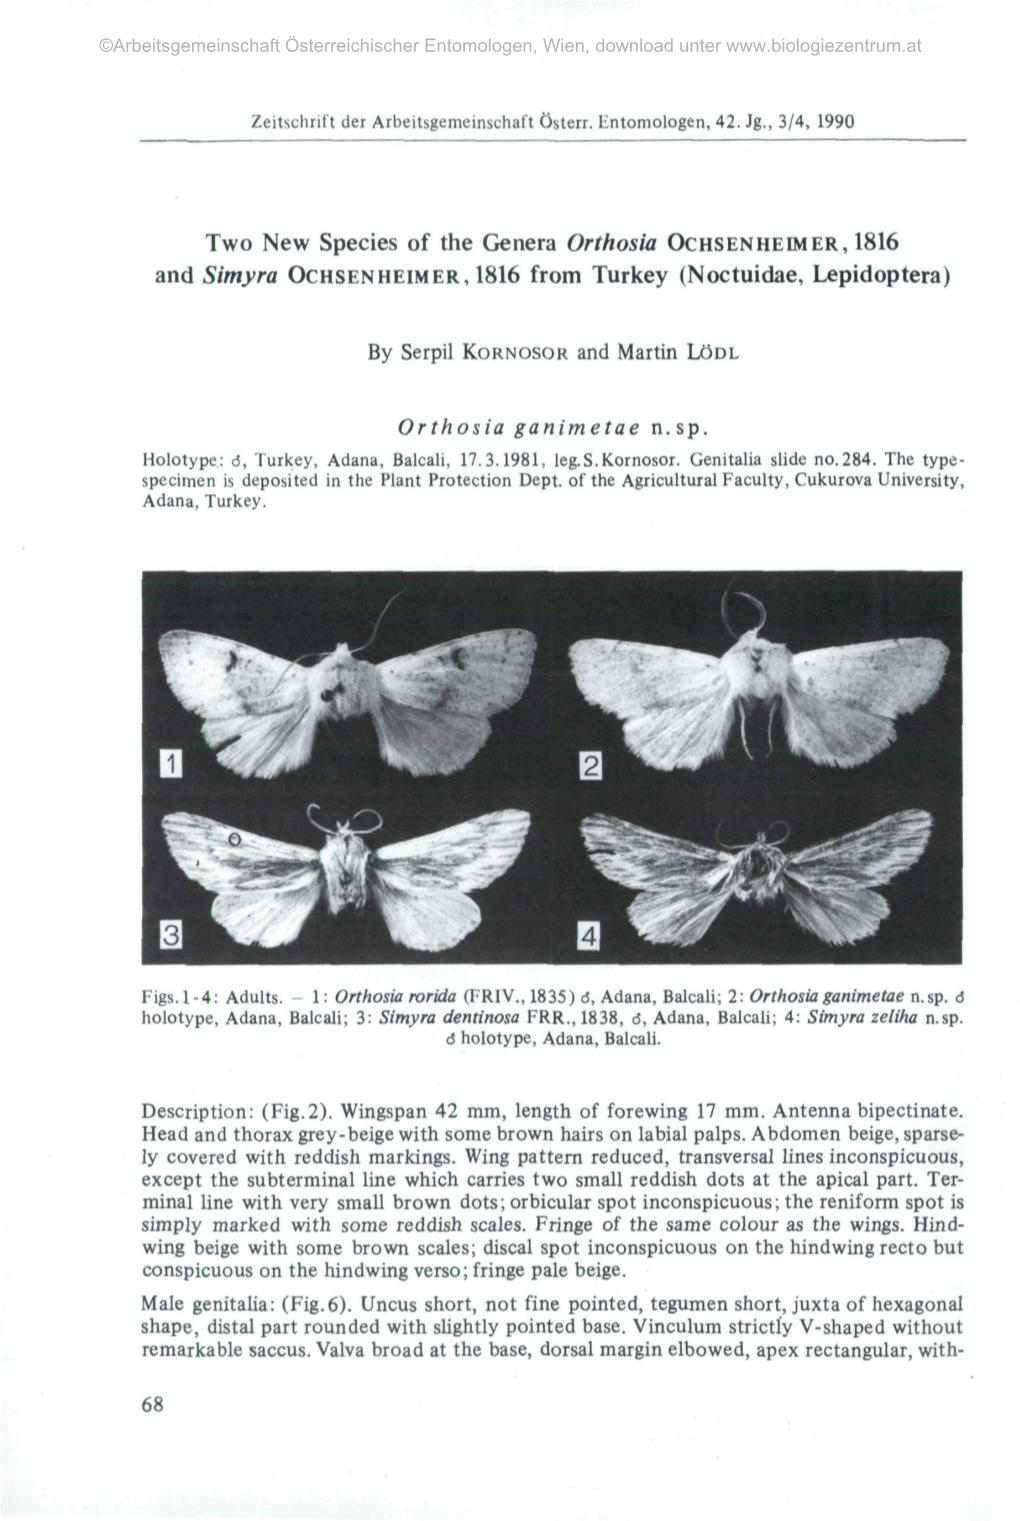 Two New Species of the Genera Orthosia OCHSENHEIMER, 1816 and Simyra OCHSENHEIMER, 1816 from Turkey (Noctuidae, Lepidoptera)